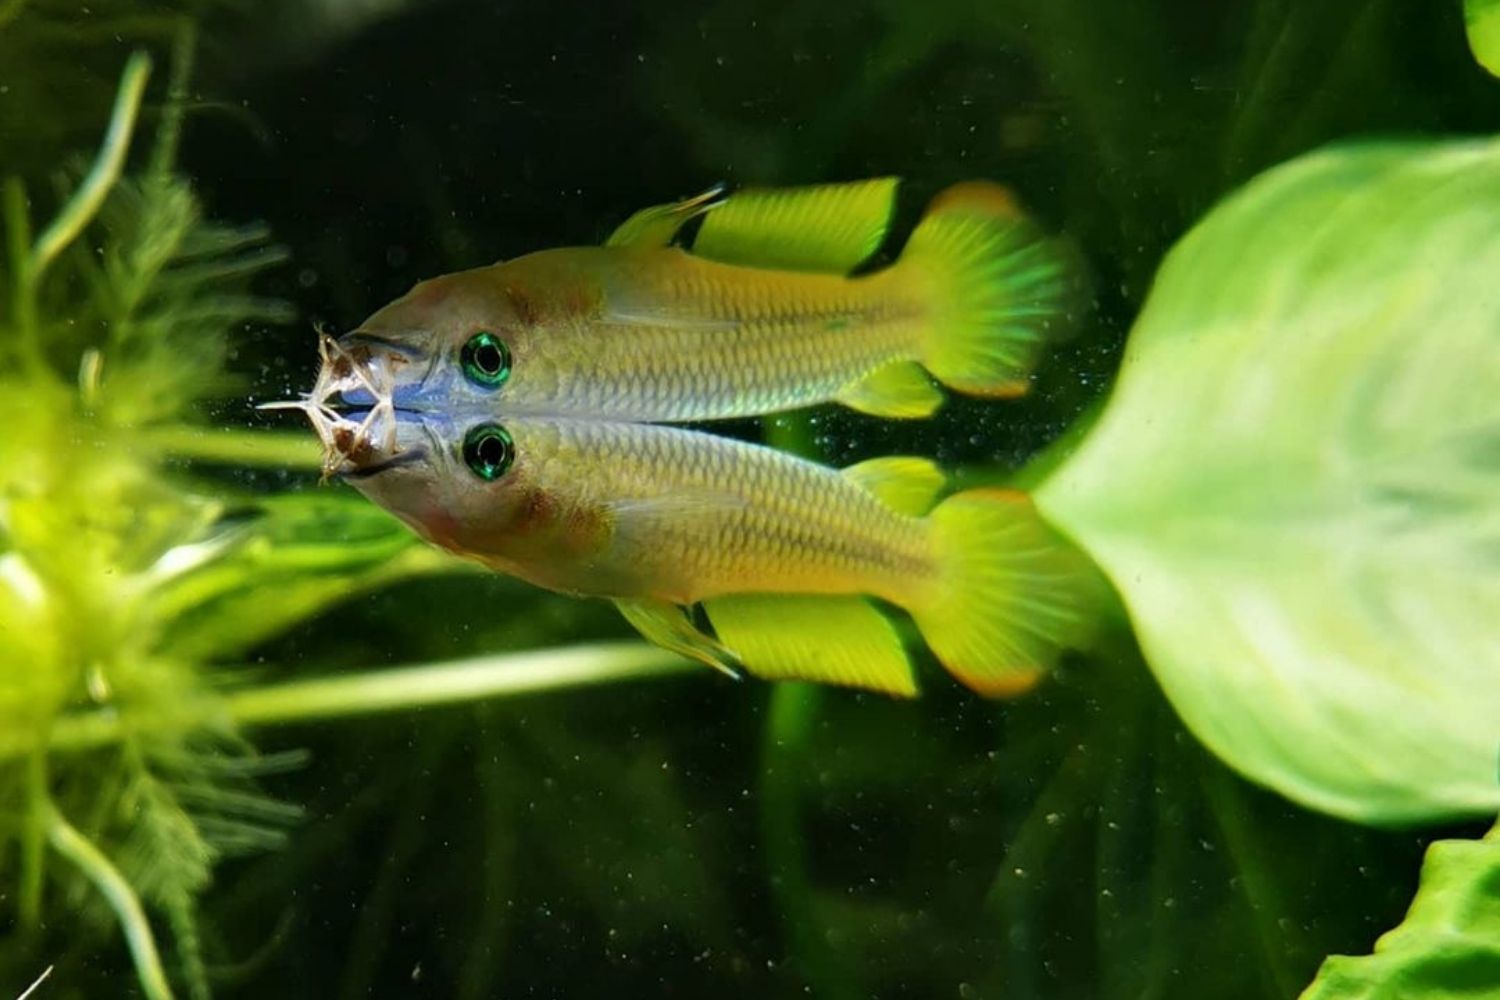 Golden Wonder Killifish Eating a Small Fish